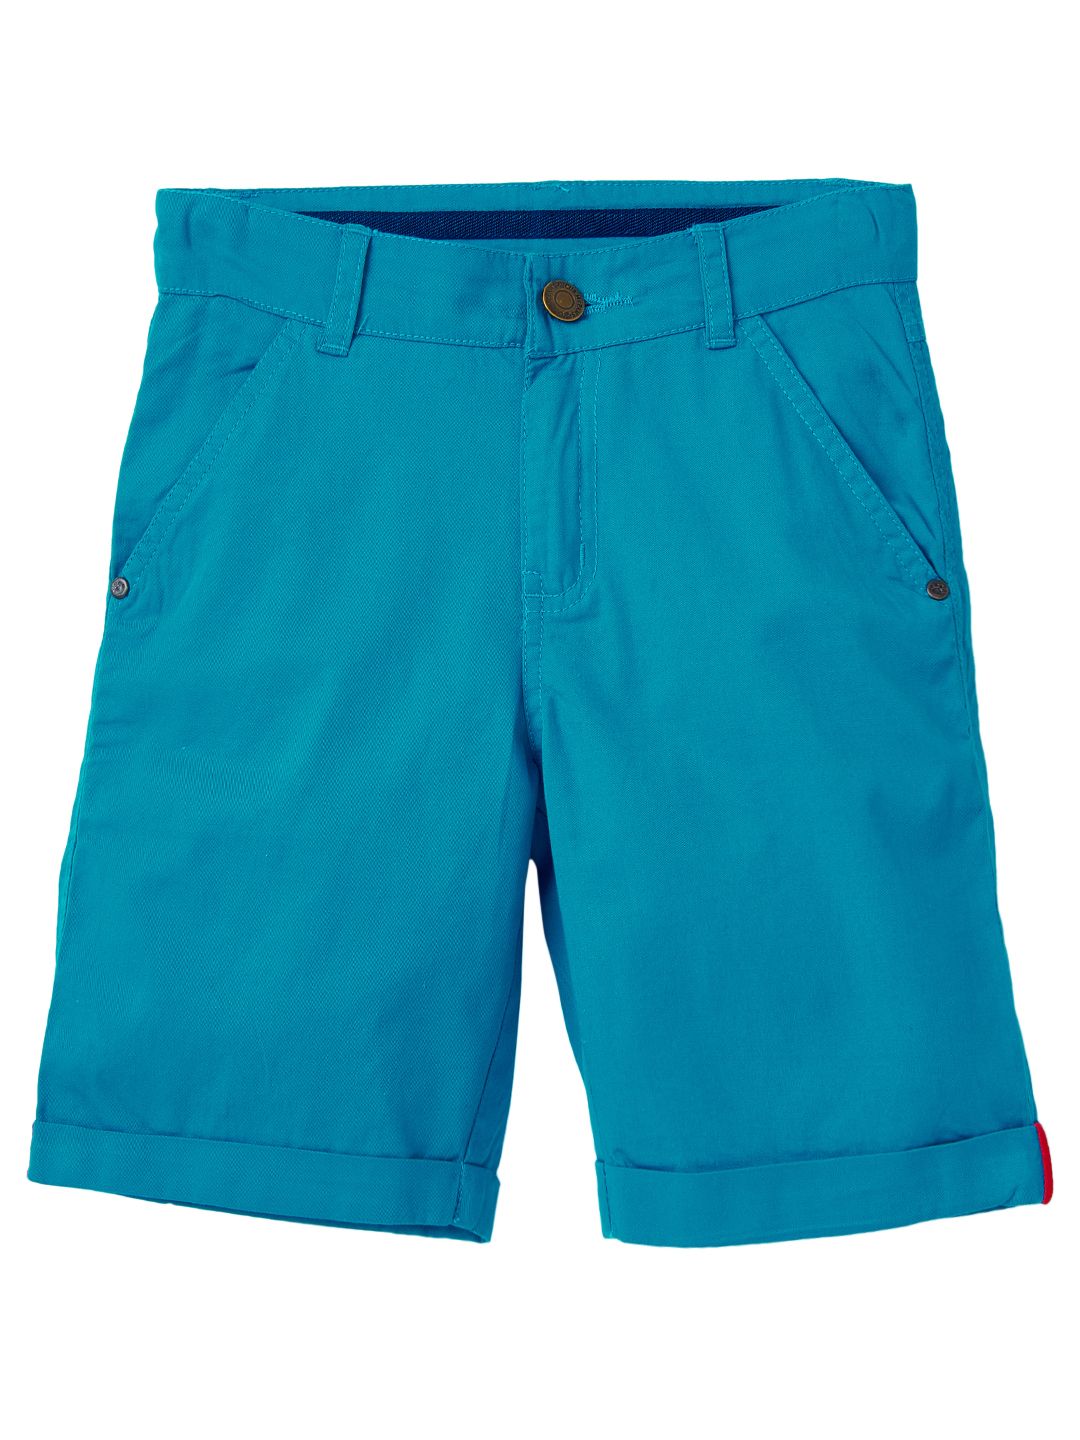 Boys Cotton Twill Solid Aqua Shorts